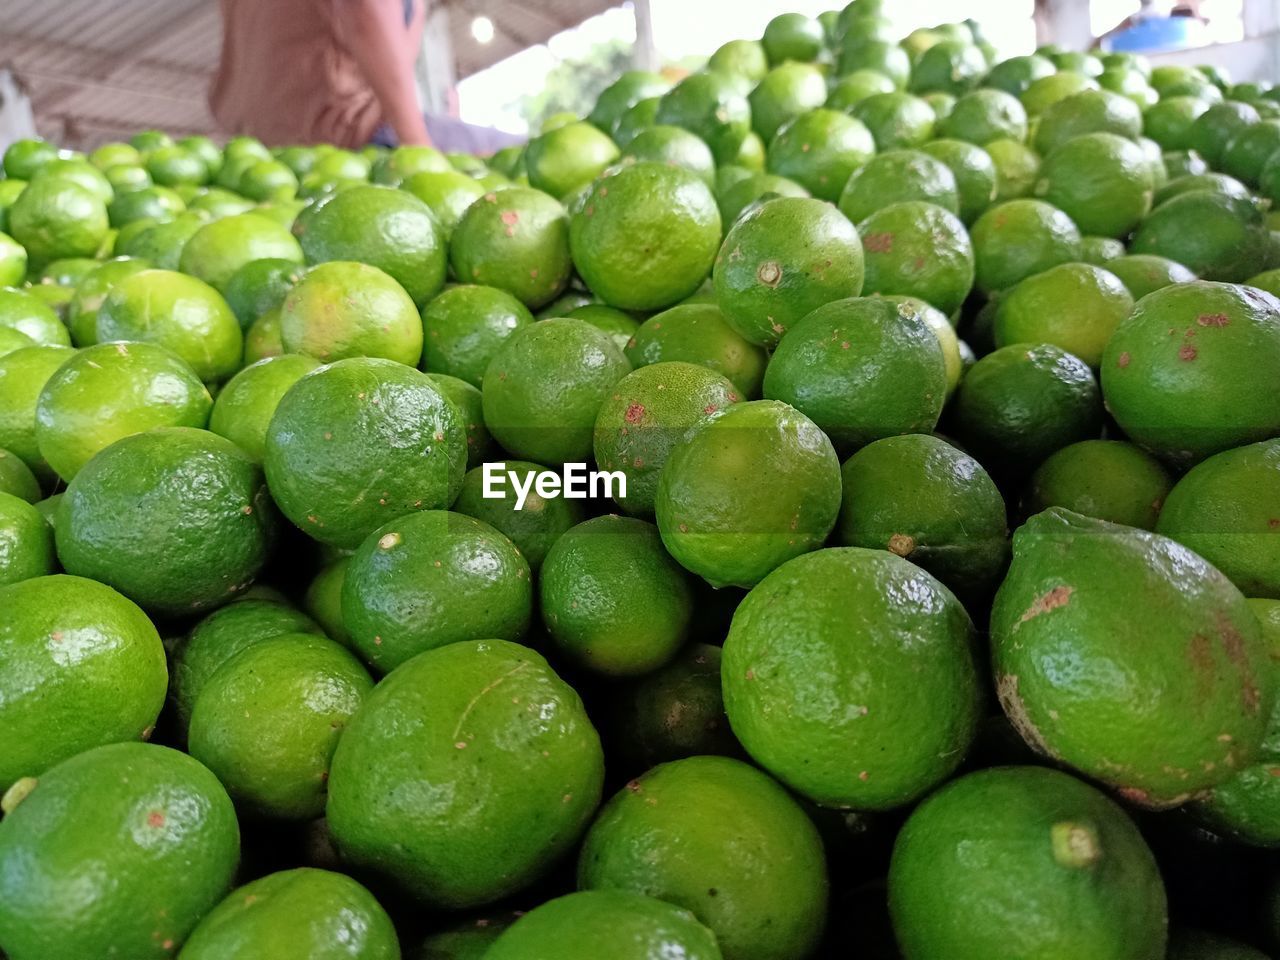 Green lemons vitamin c